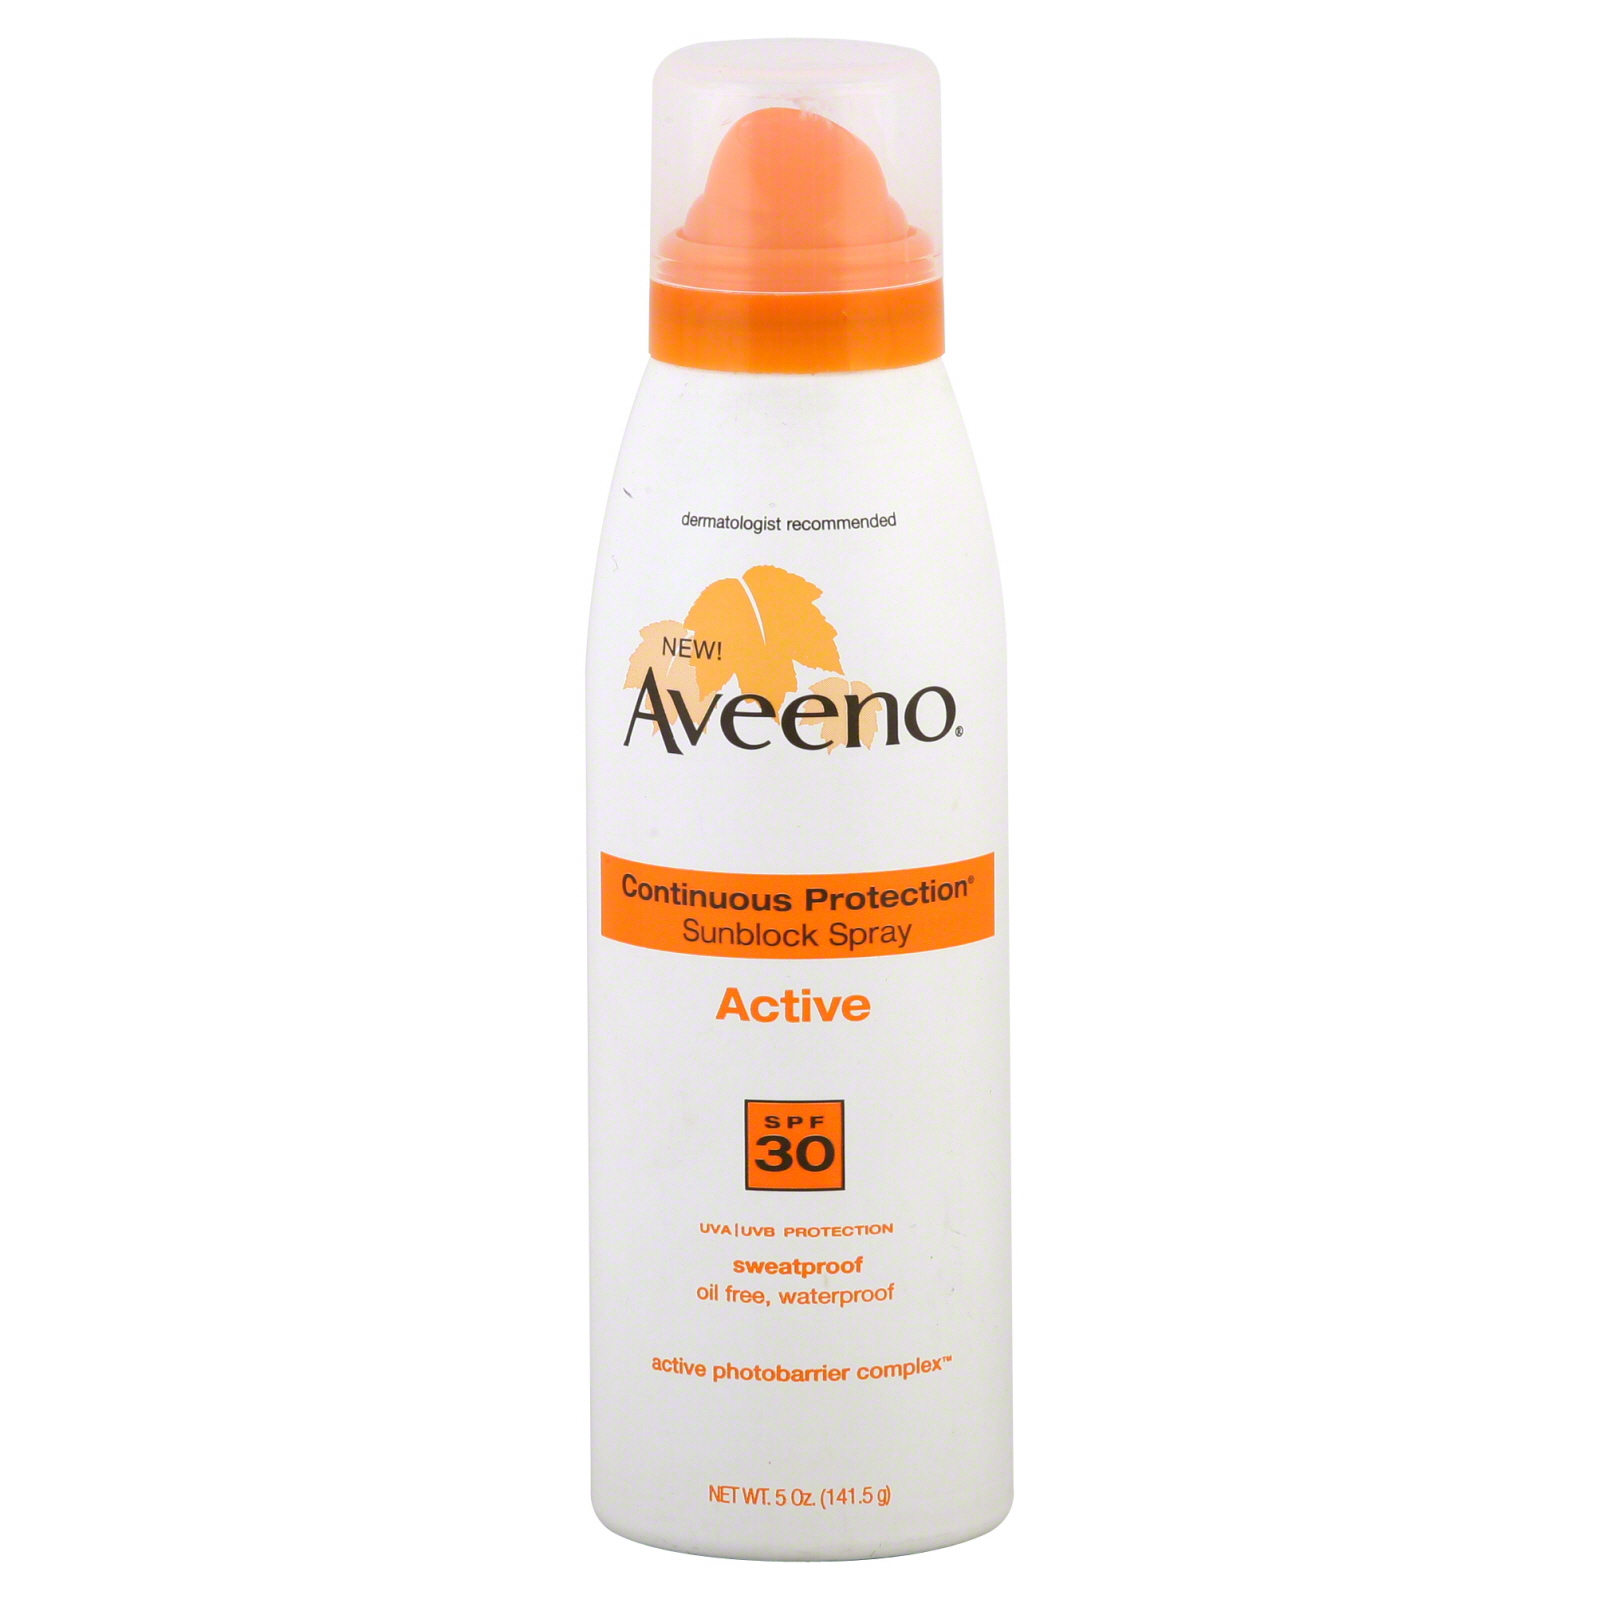 Aveeno Active Sunblock Spray, Continuous Protection, SPF 30, 5 oz (141.5 g)